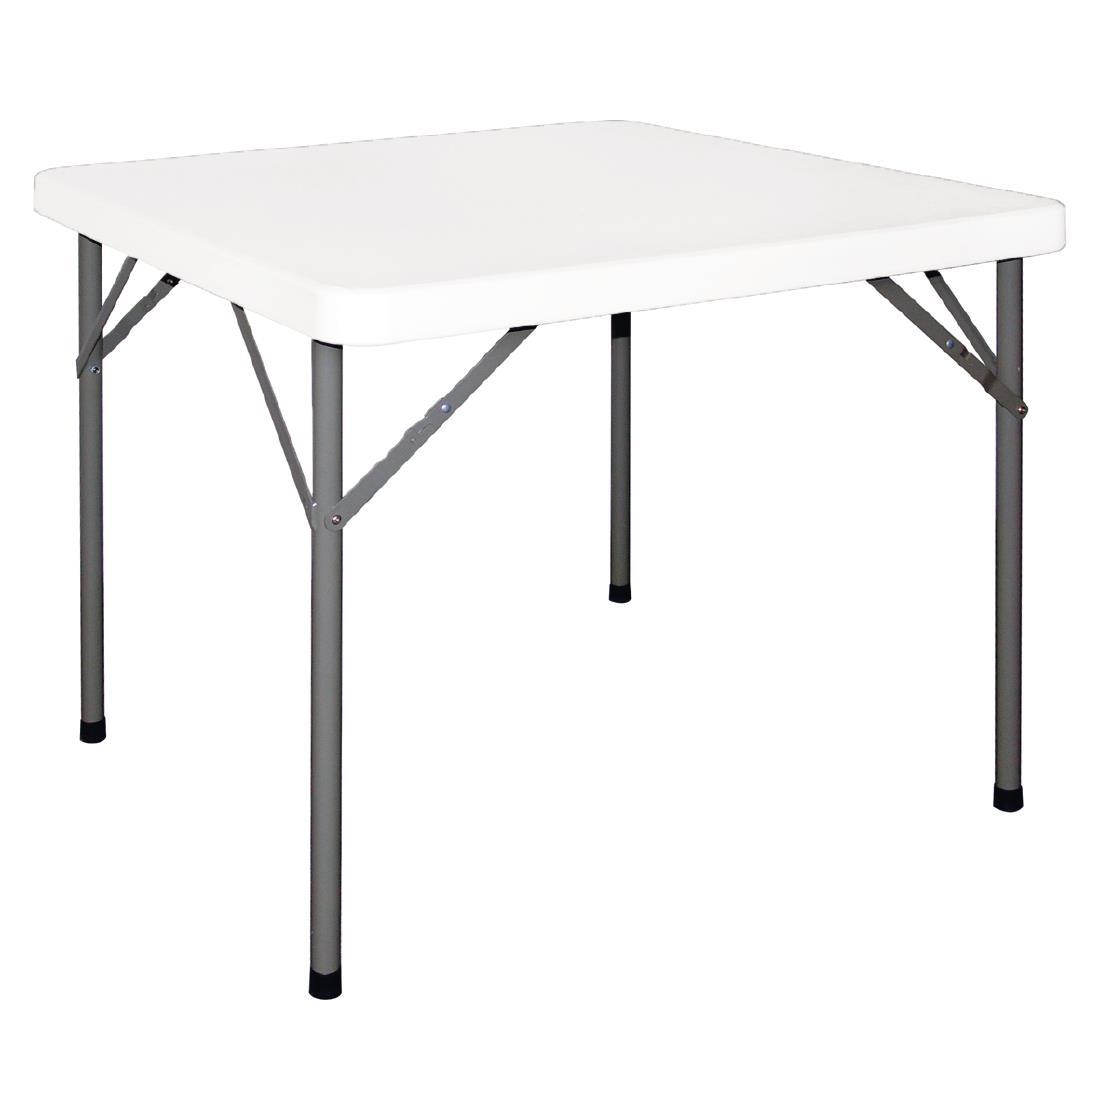 Y807 - Bolero Foldaway Square Table